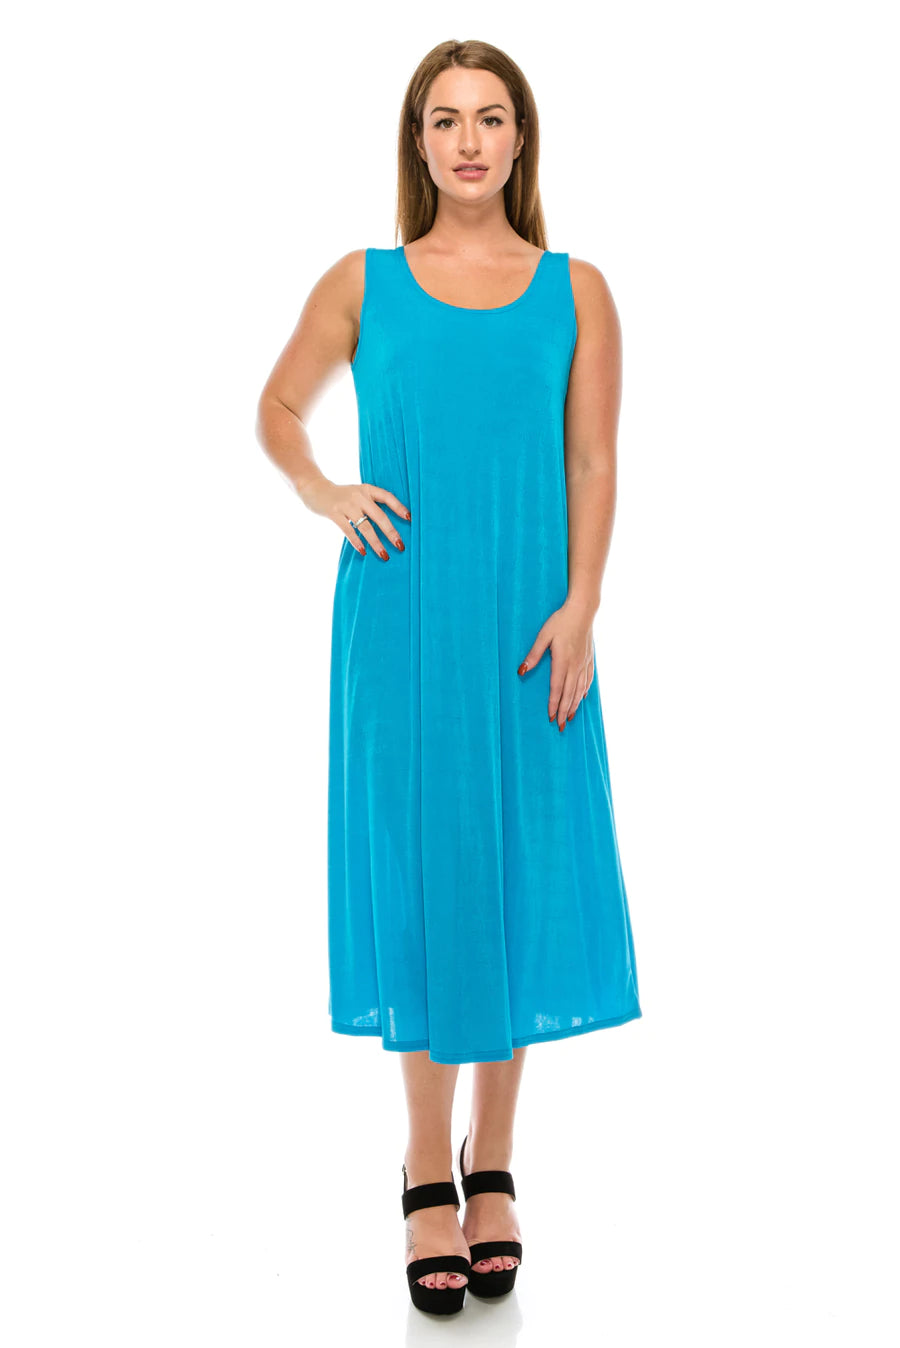 019- JoStar Slinky Sleeveless Long Dress- Turquoise